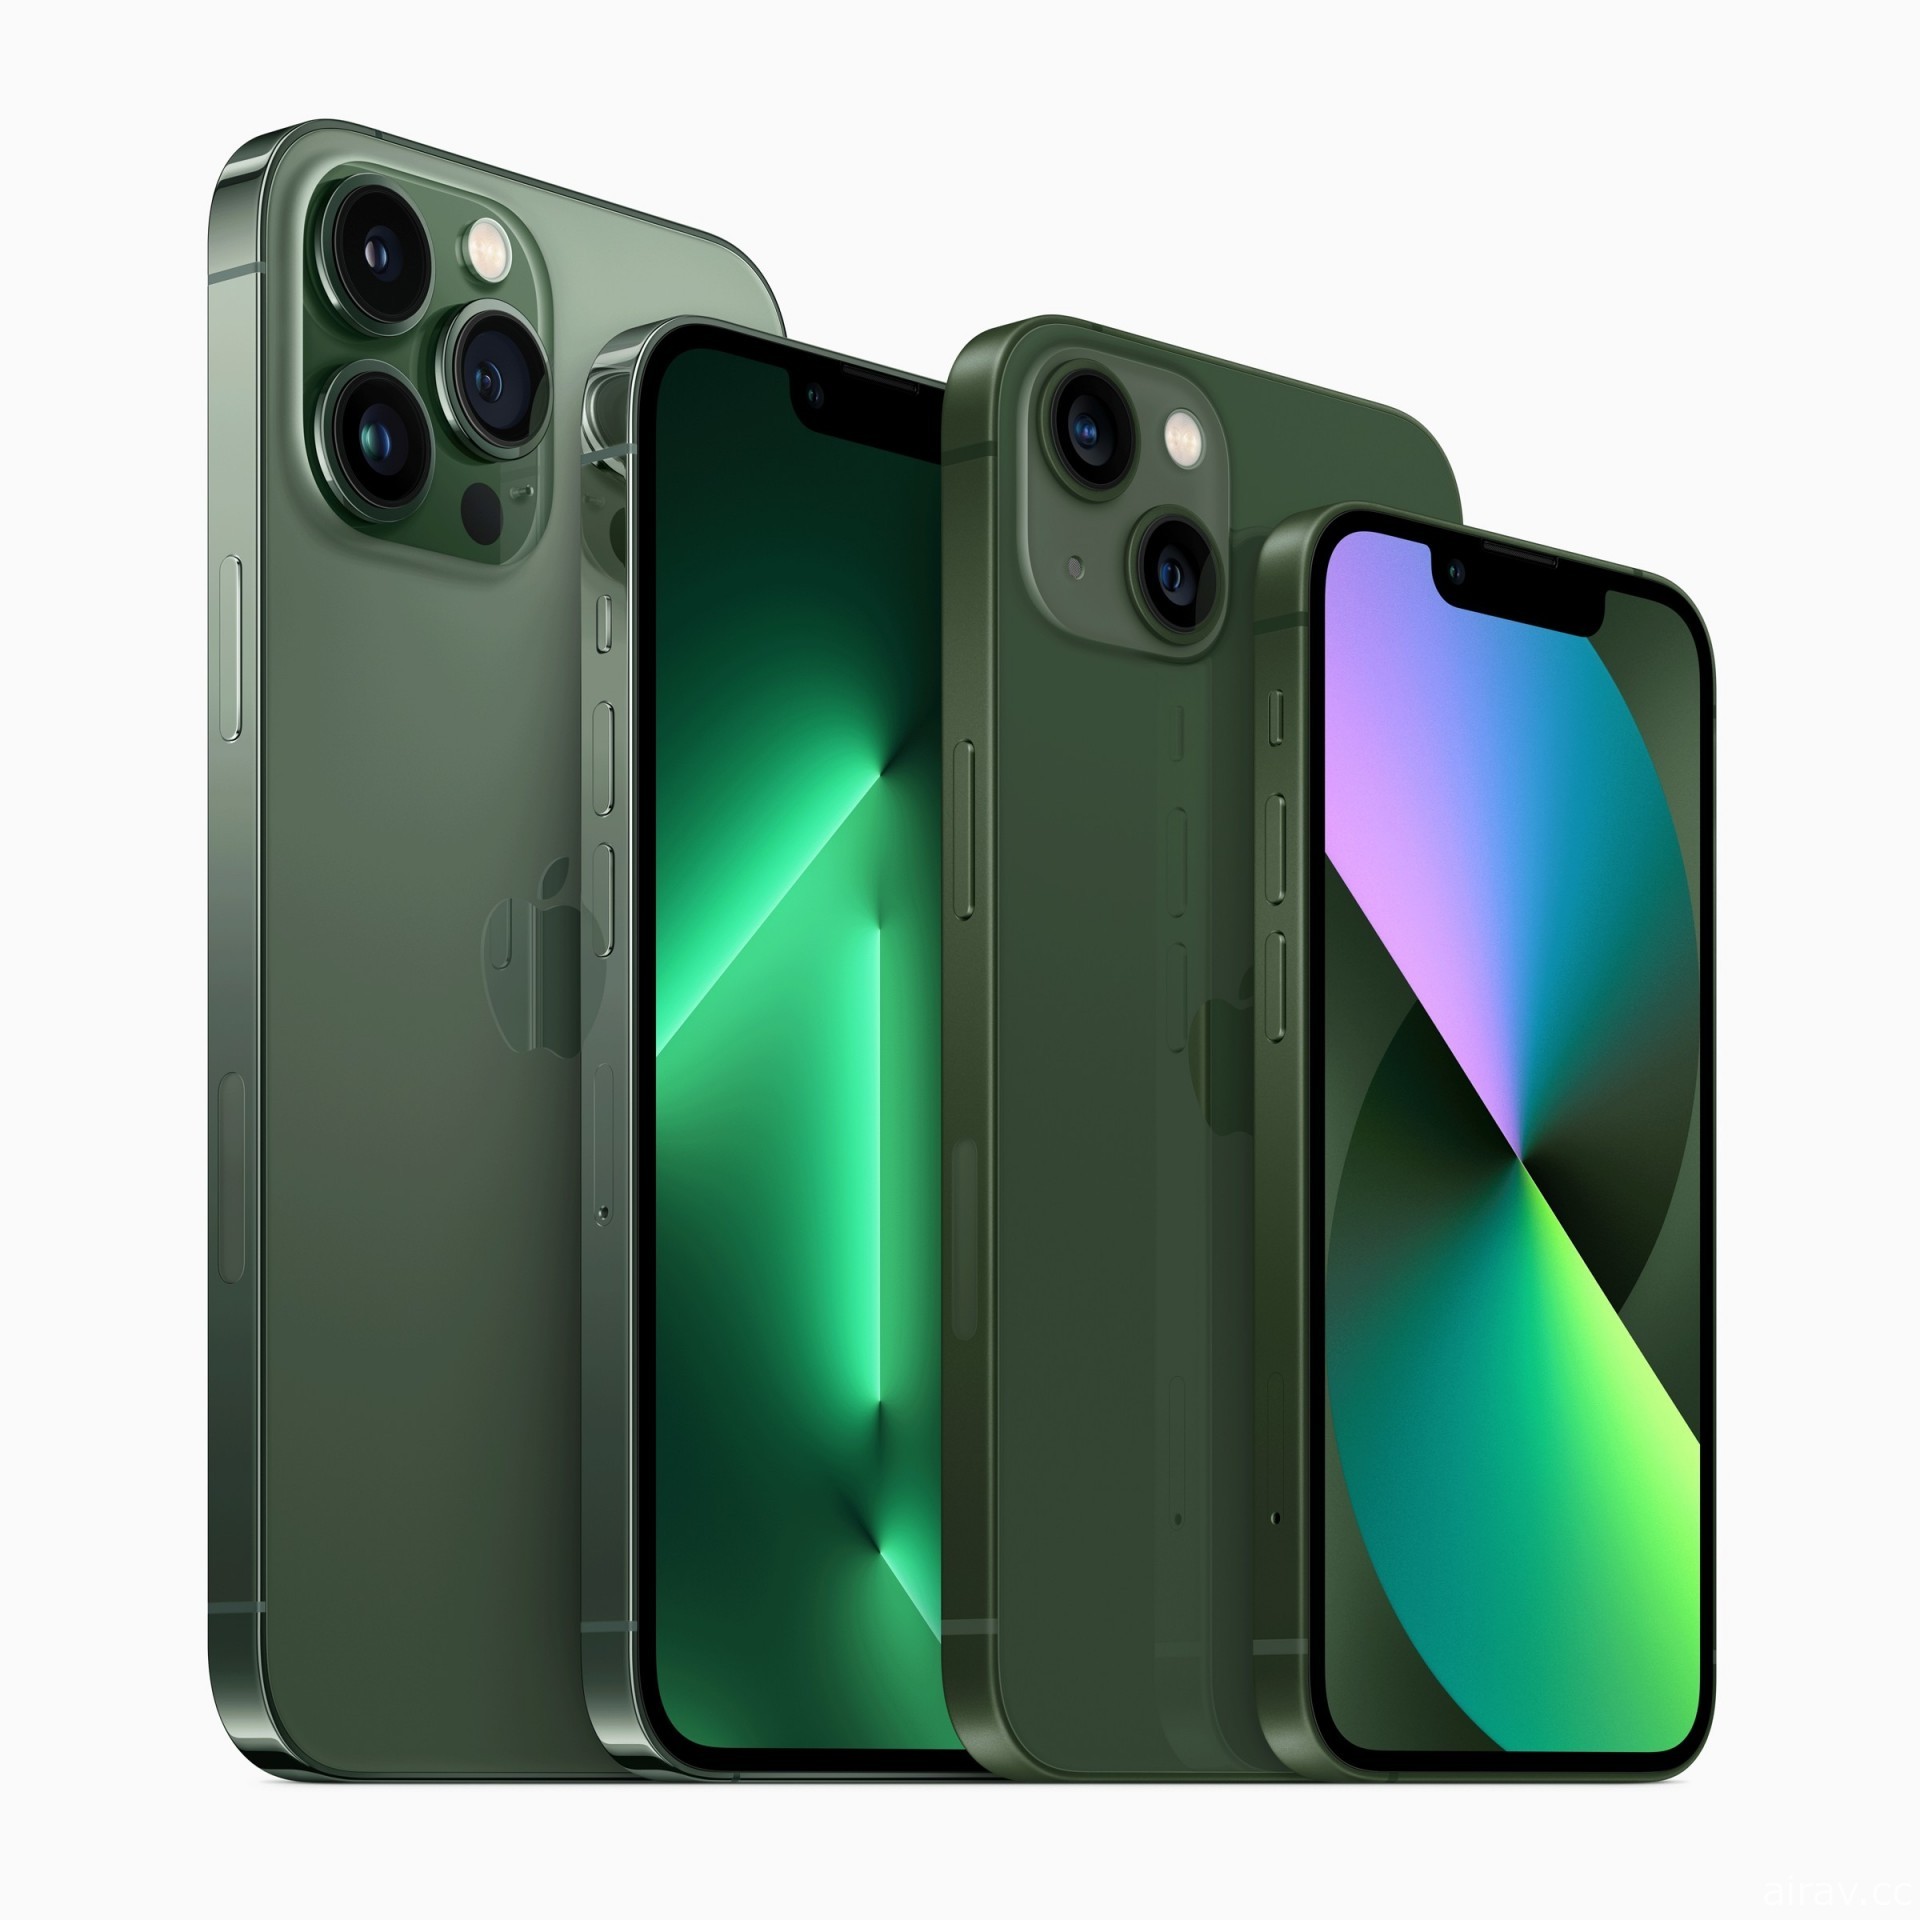 Apple iPhone 13 系列推出全新松岭青色及绿色外观